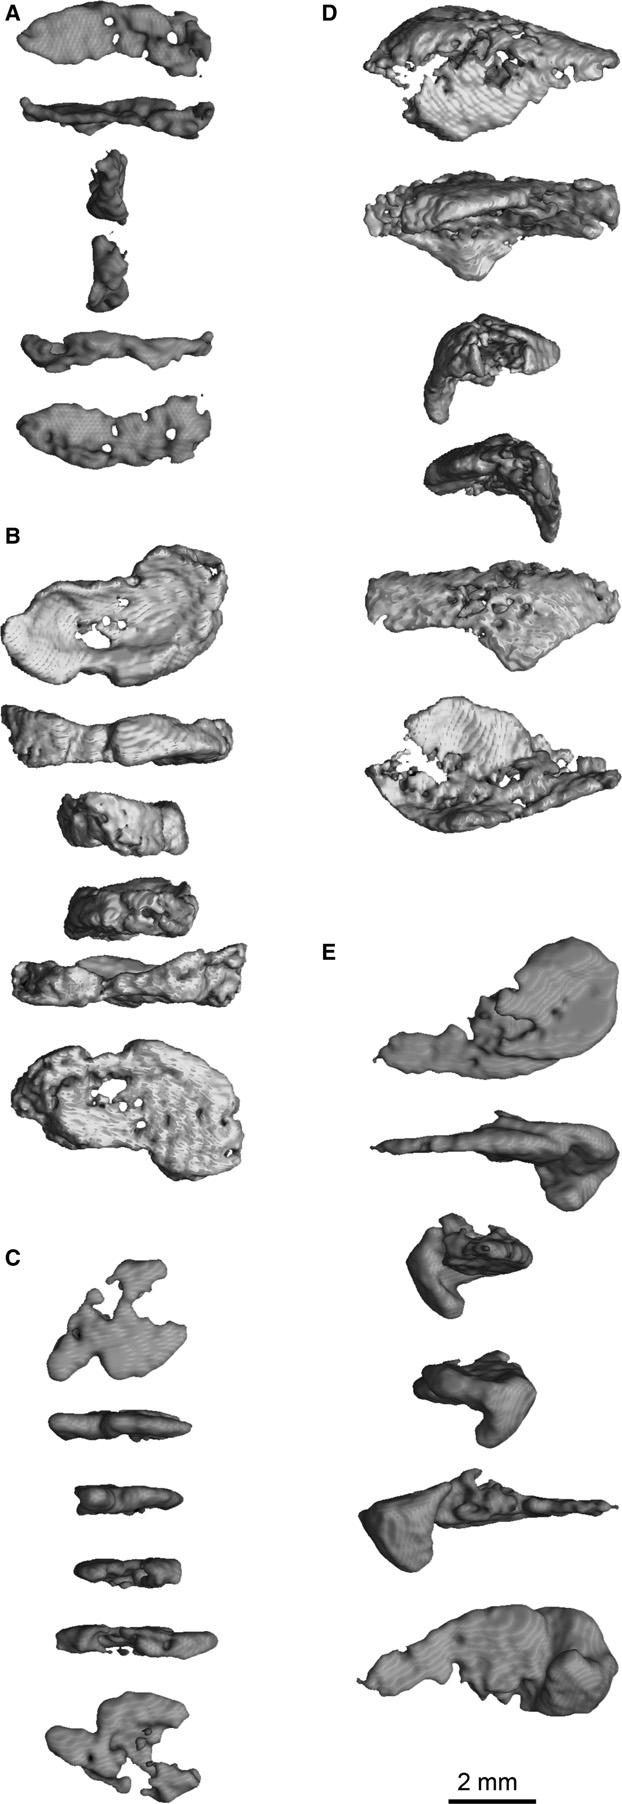 84 Early theropod dinosaur manus variation, D. E. Barta et al. Fig. 3 AMNH FARB 30631 Coelophysis bauri carpals. (A) Radiale. (B) Fused intermedium (?) and ulnare. (C) Centrale.